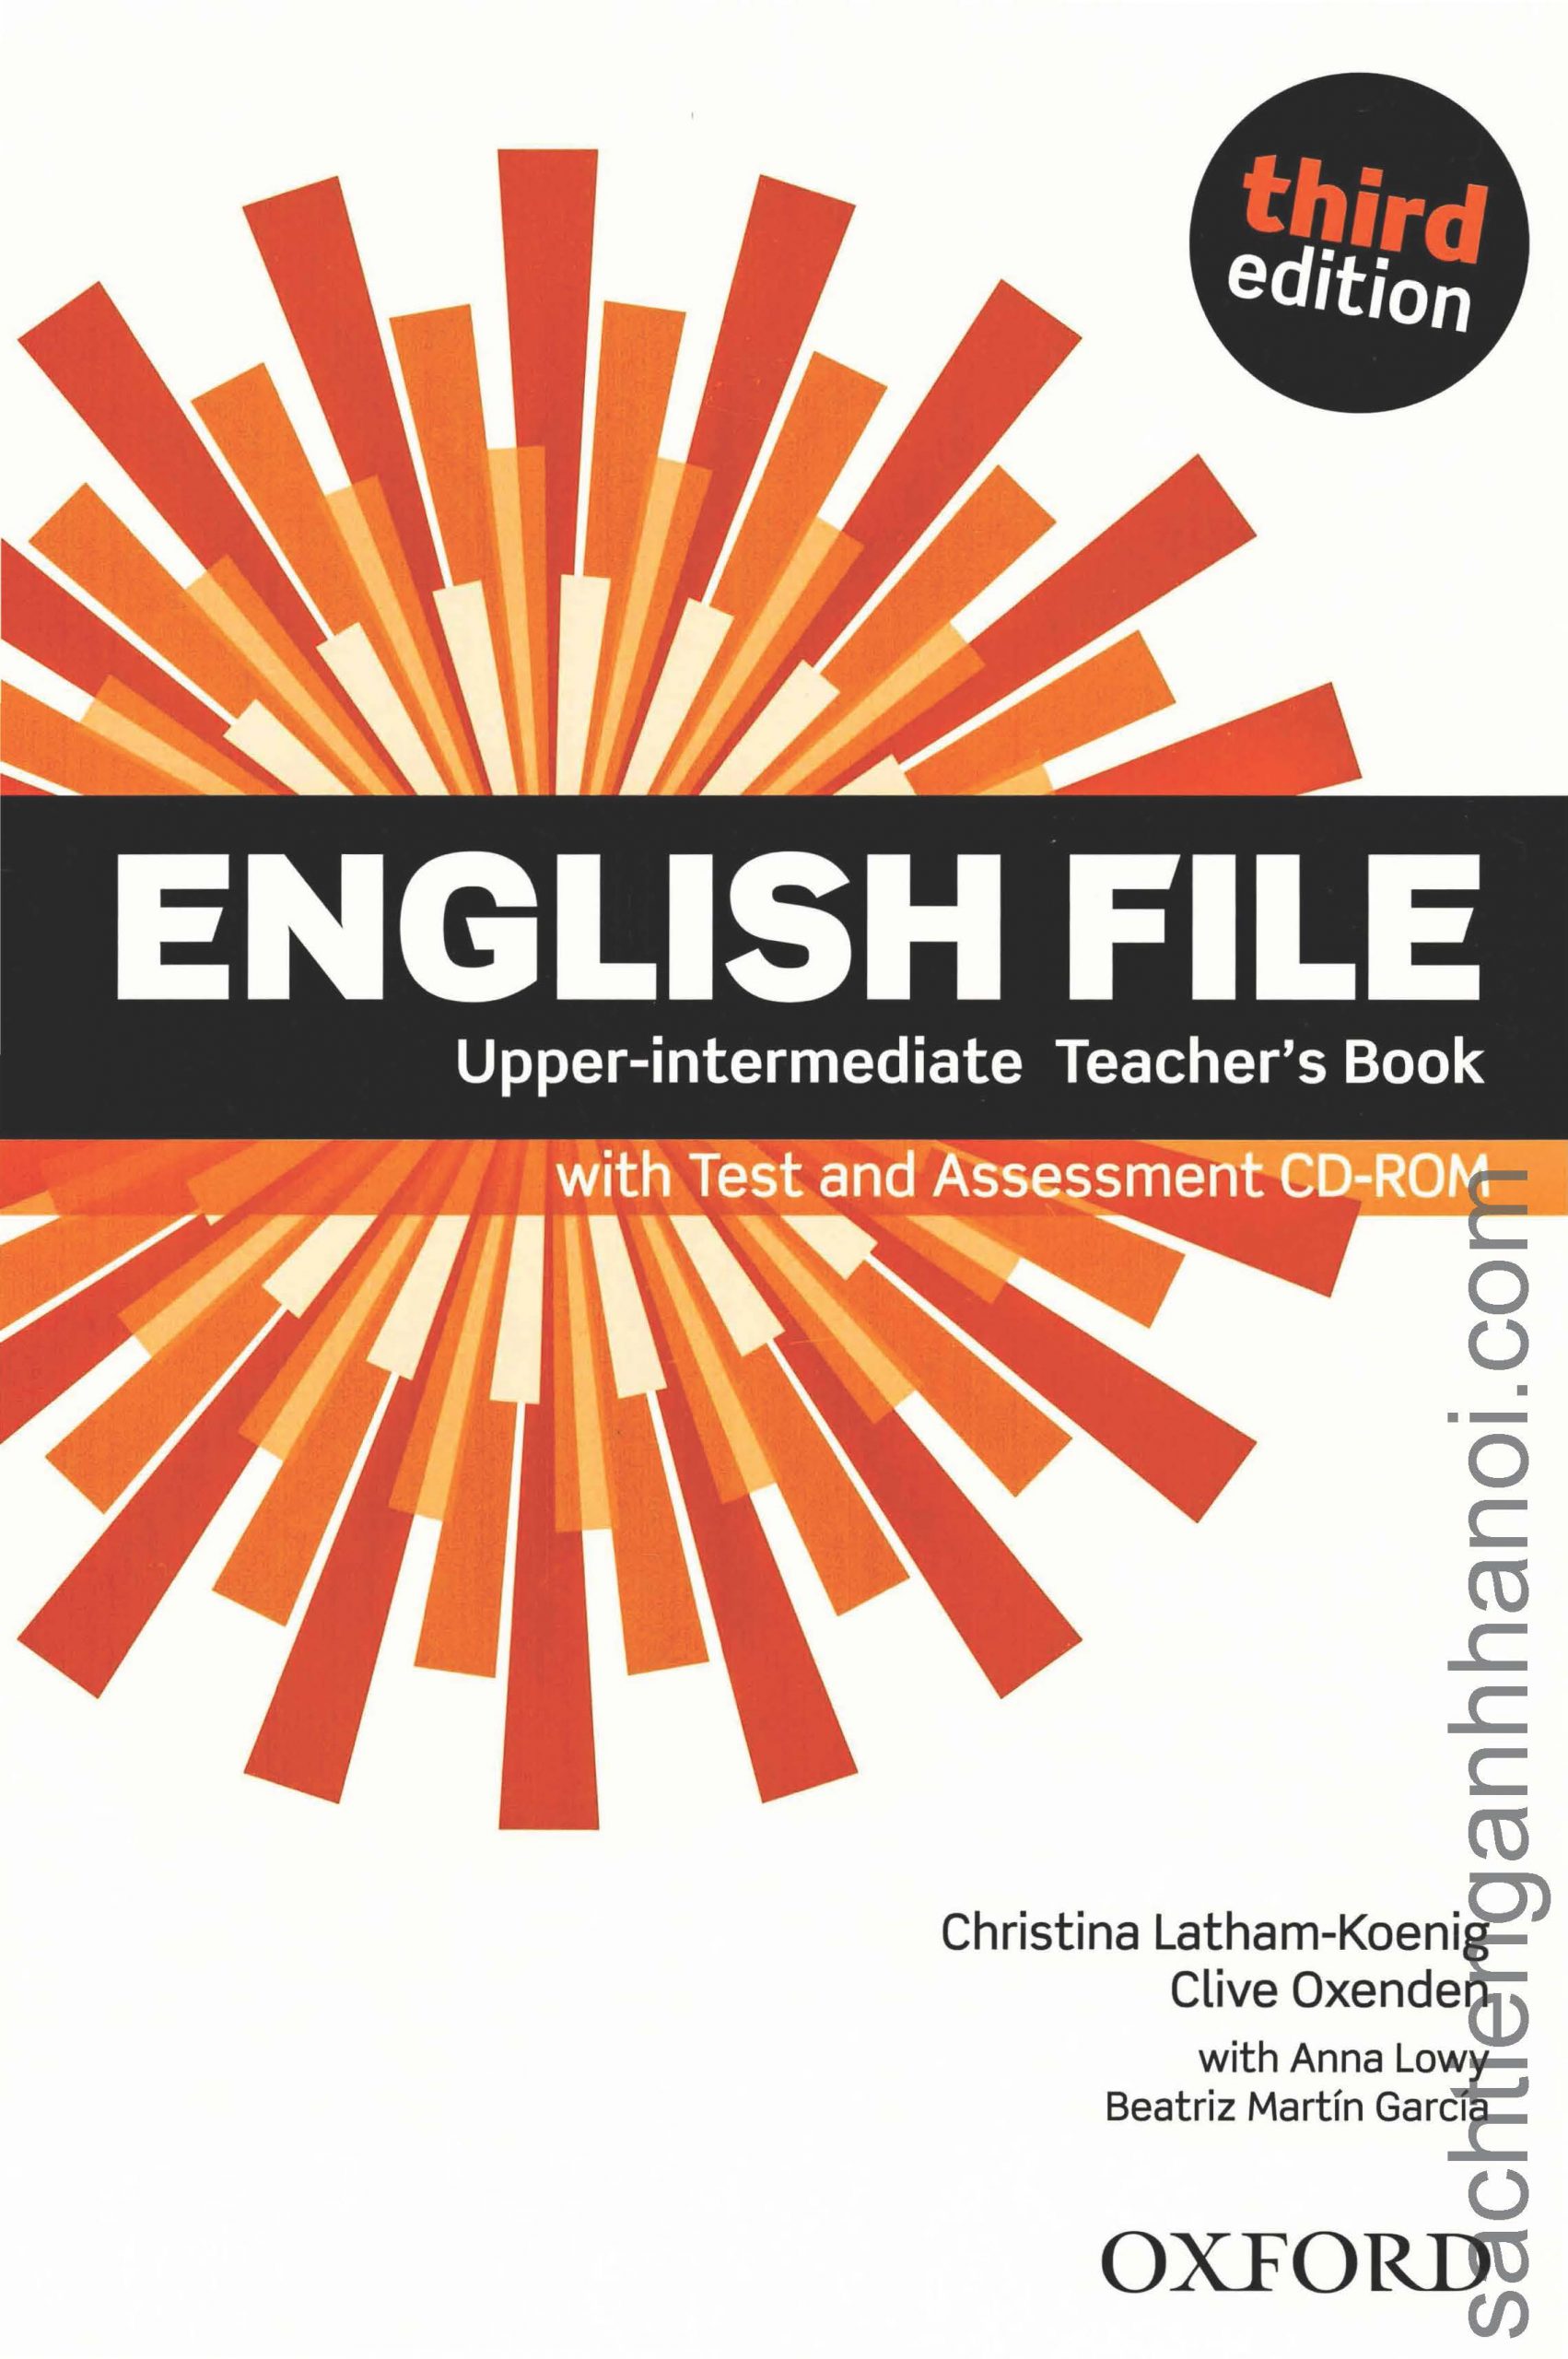 English file upper intermediate teacher book. New English file Elementary третье издание. File Test в English file Elementary. English file 3 Elementary. Английский Elementary third Edition.